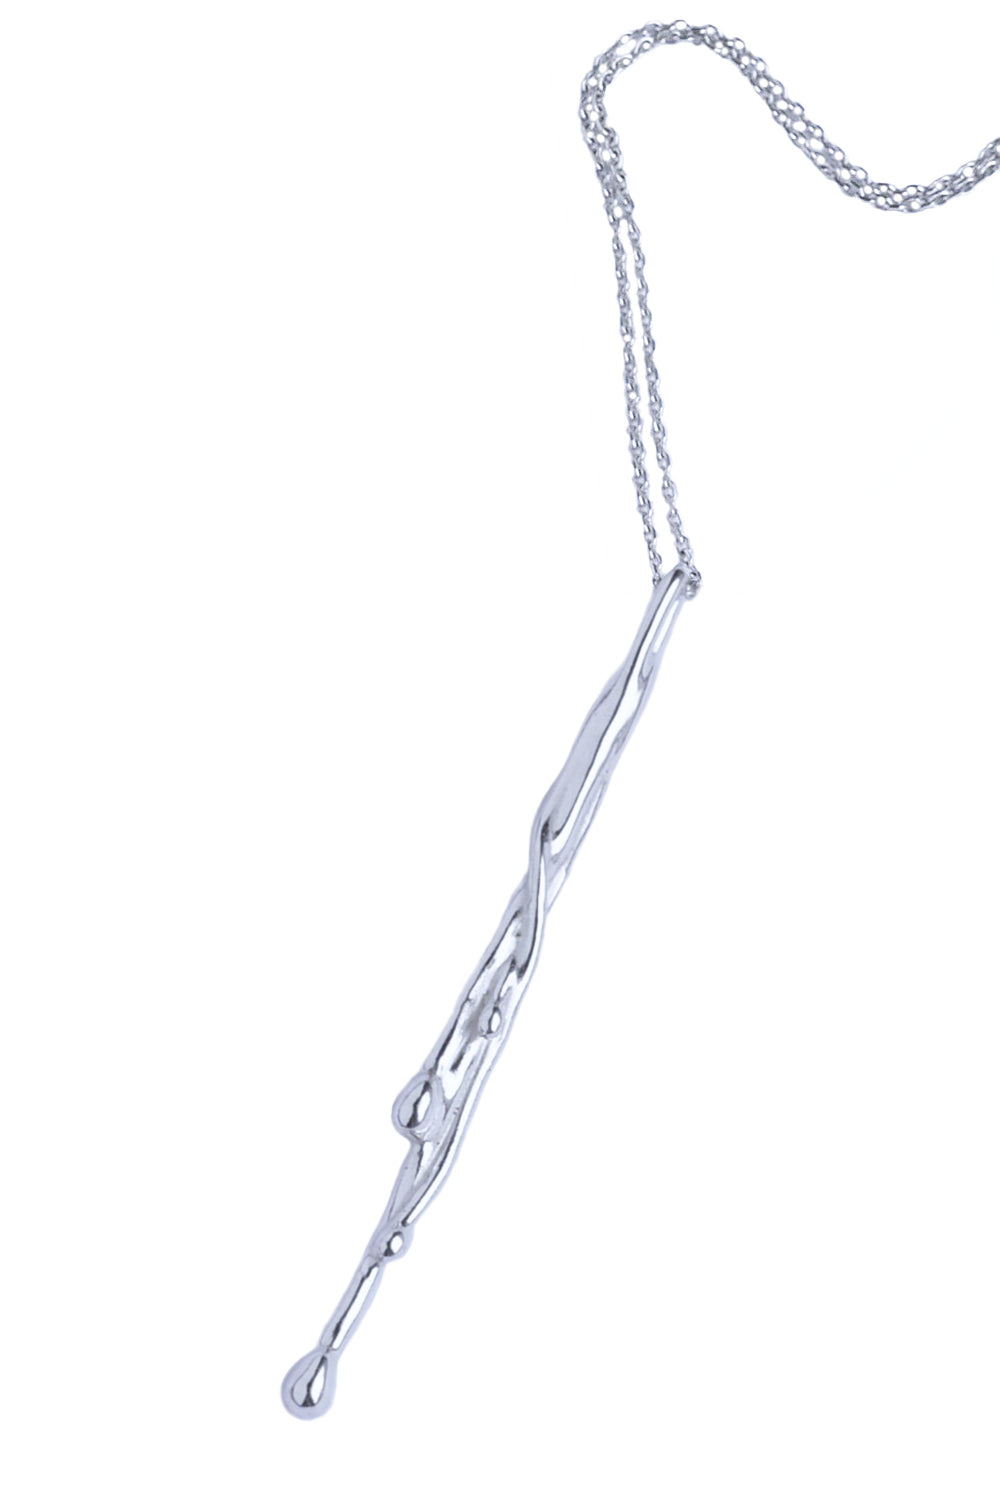 rain pendant necklace in silver by Annika Burman